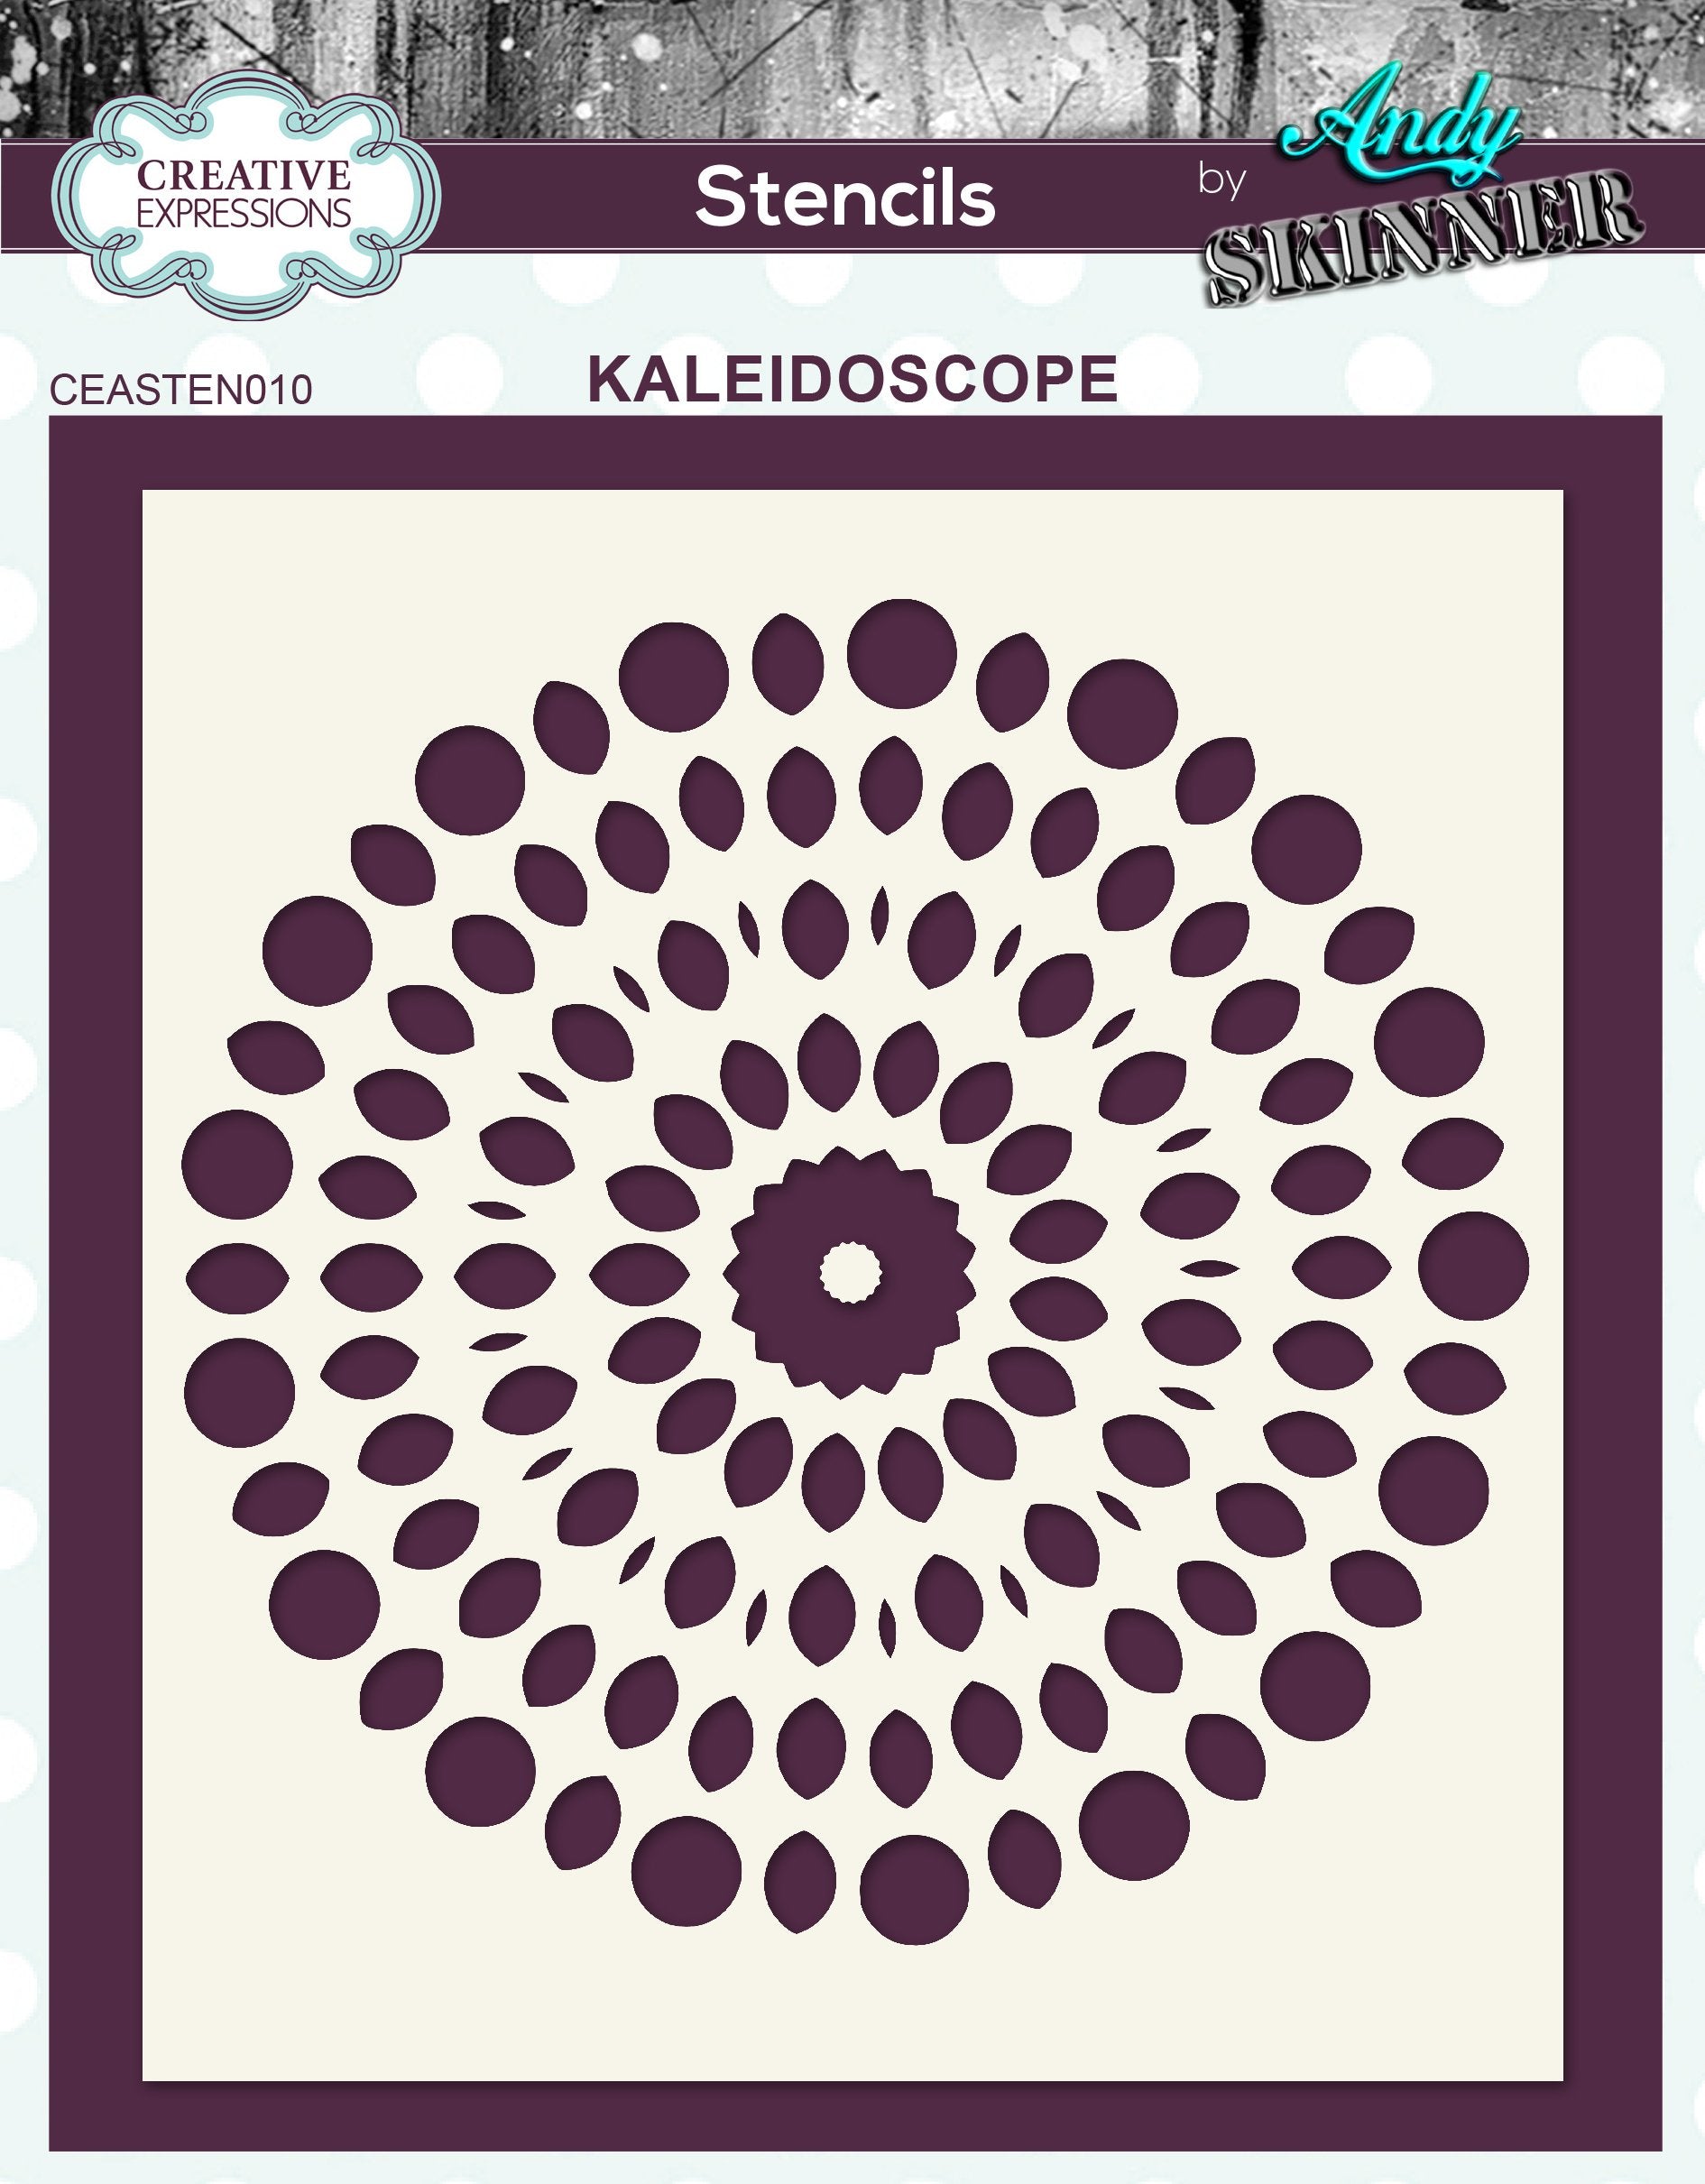 Andy Skinner Kaleidoscope 6 in x 6 in Stencil